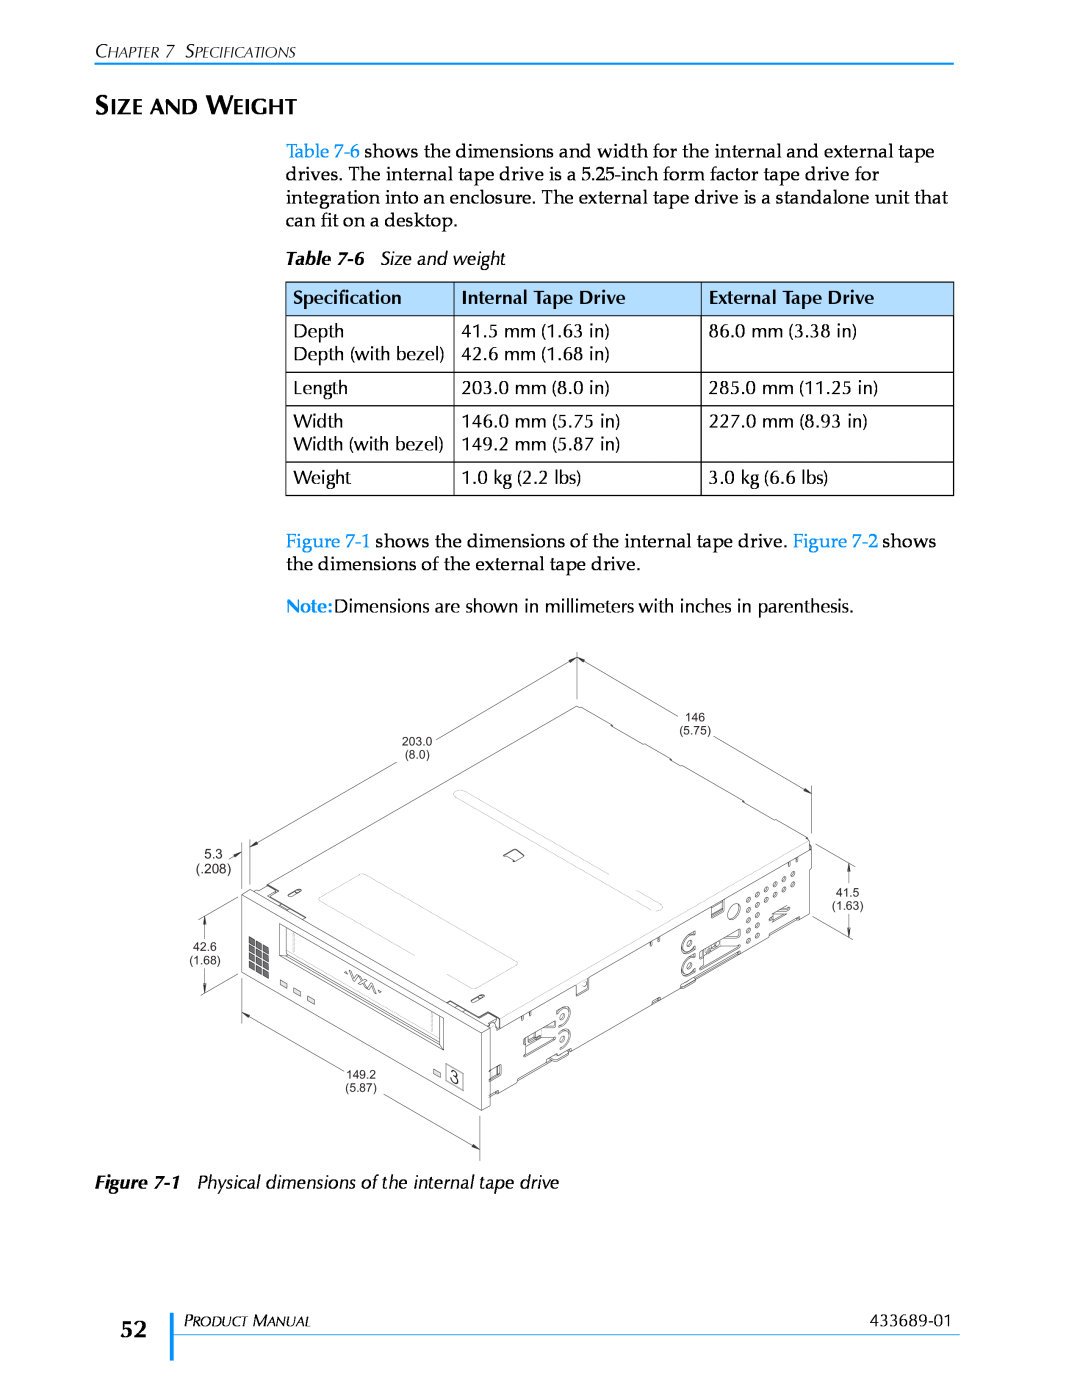 Tandberg Data VXA-320 (VXA-3) manual Size And Weight, Specification, Internal Tape Drive, External Tape Drive 